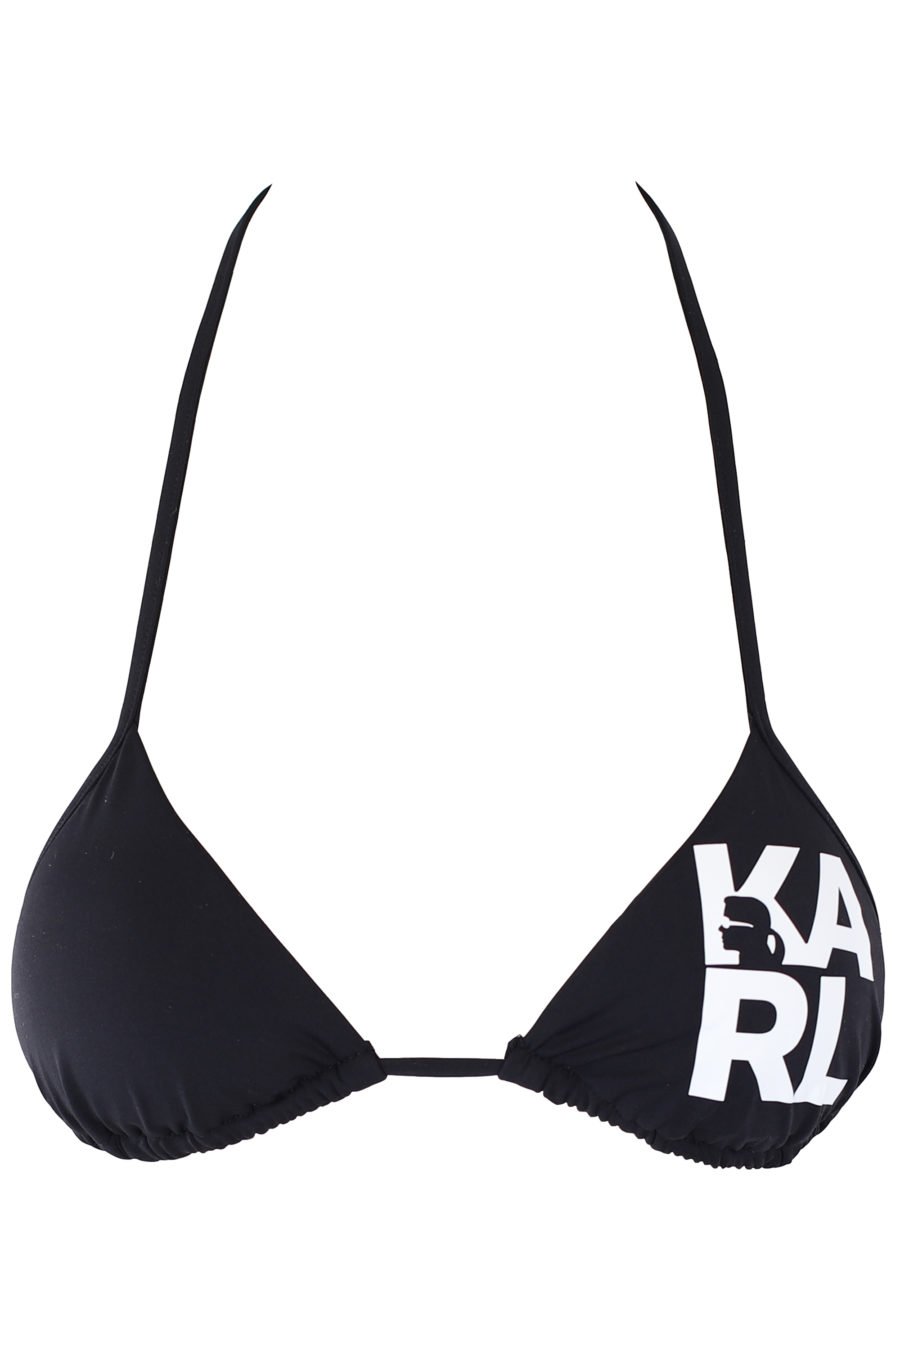 Top de bikini negro con logo blanco - IMG 1204